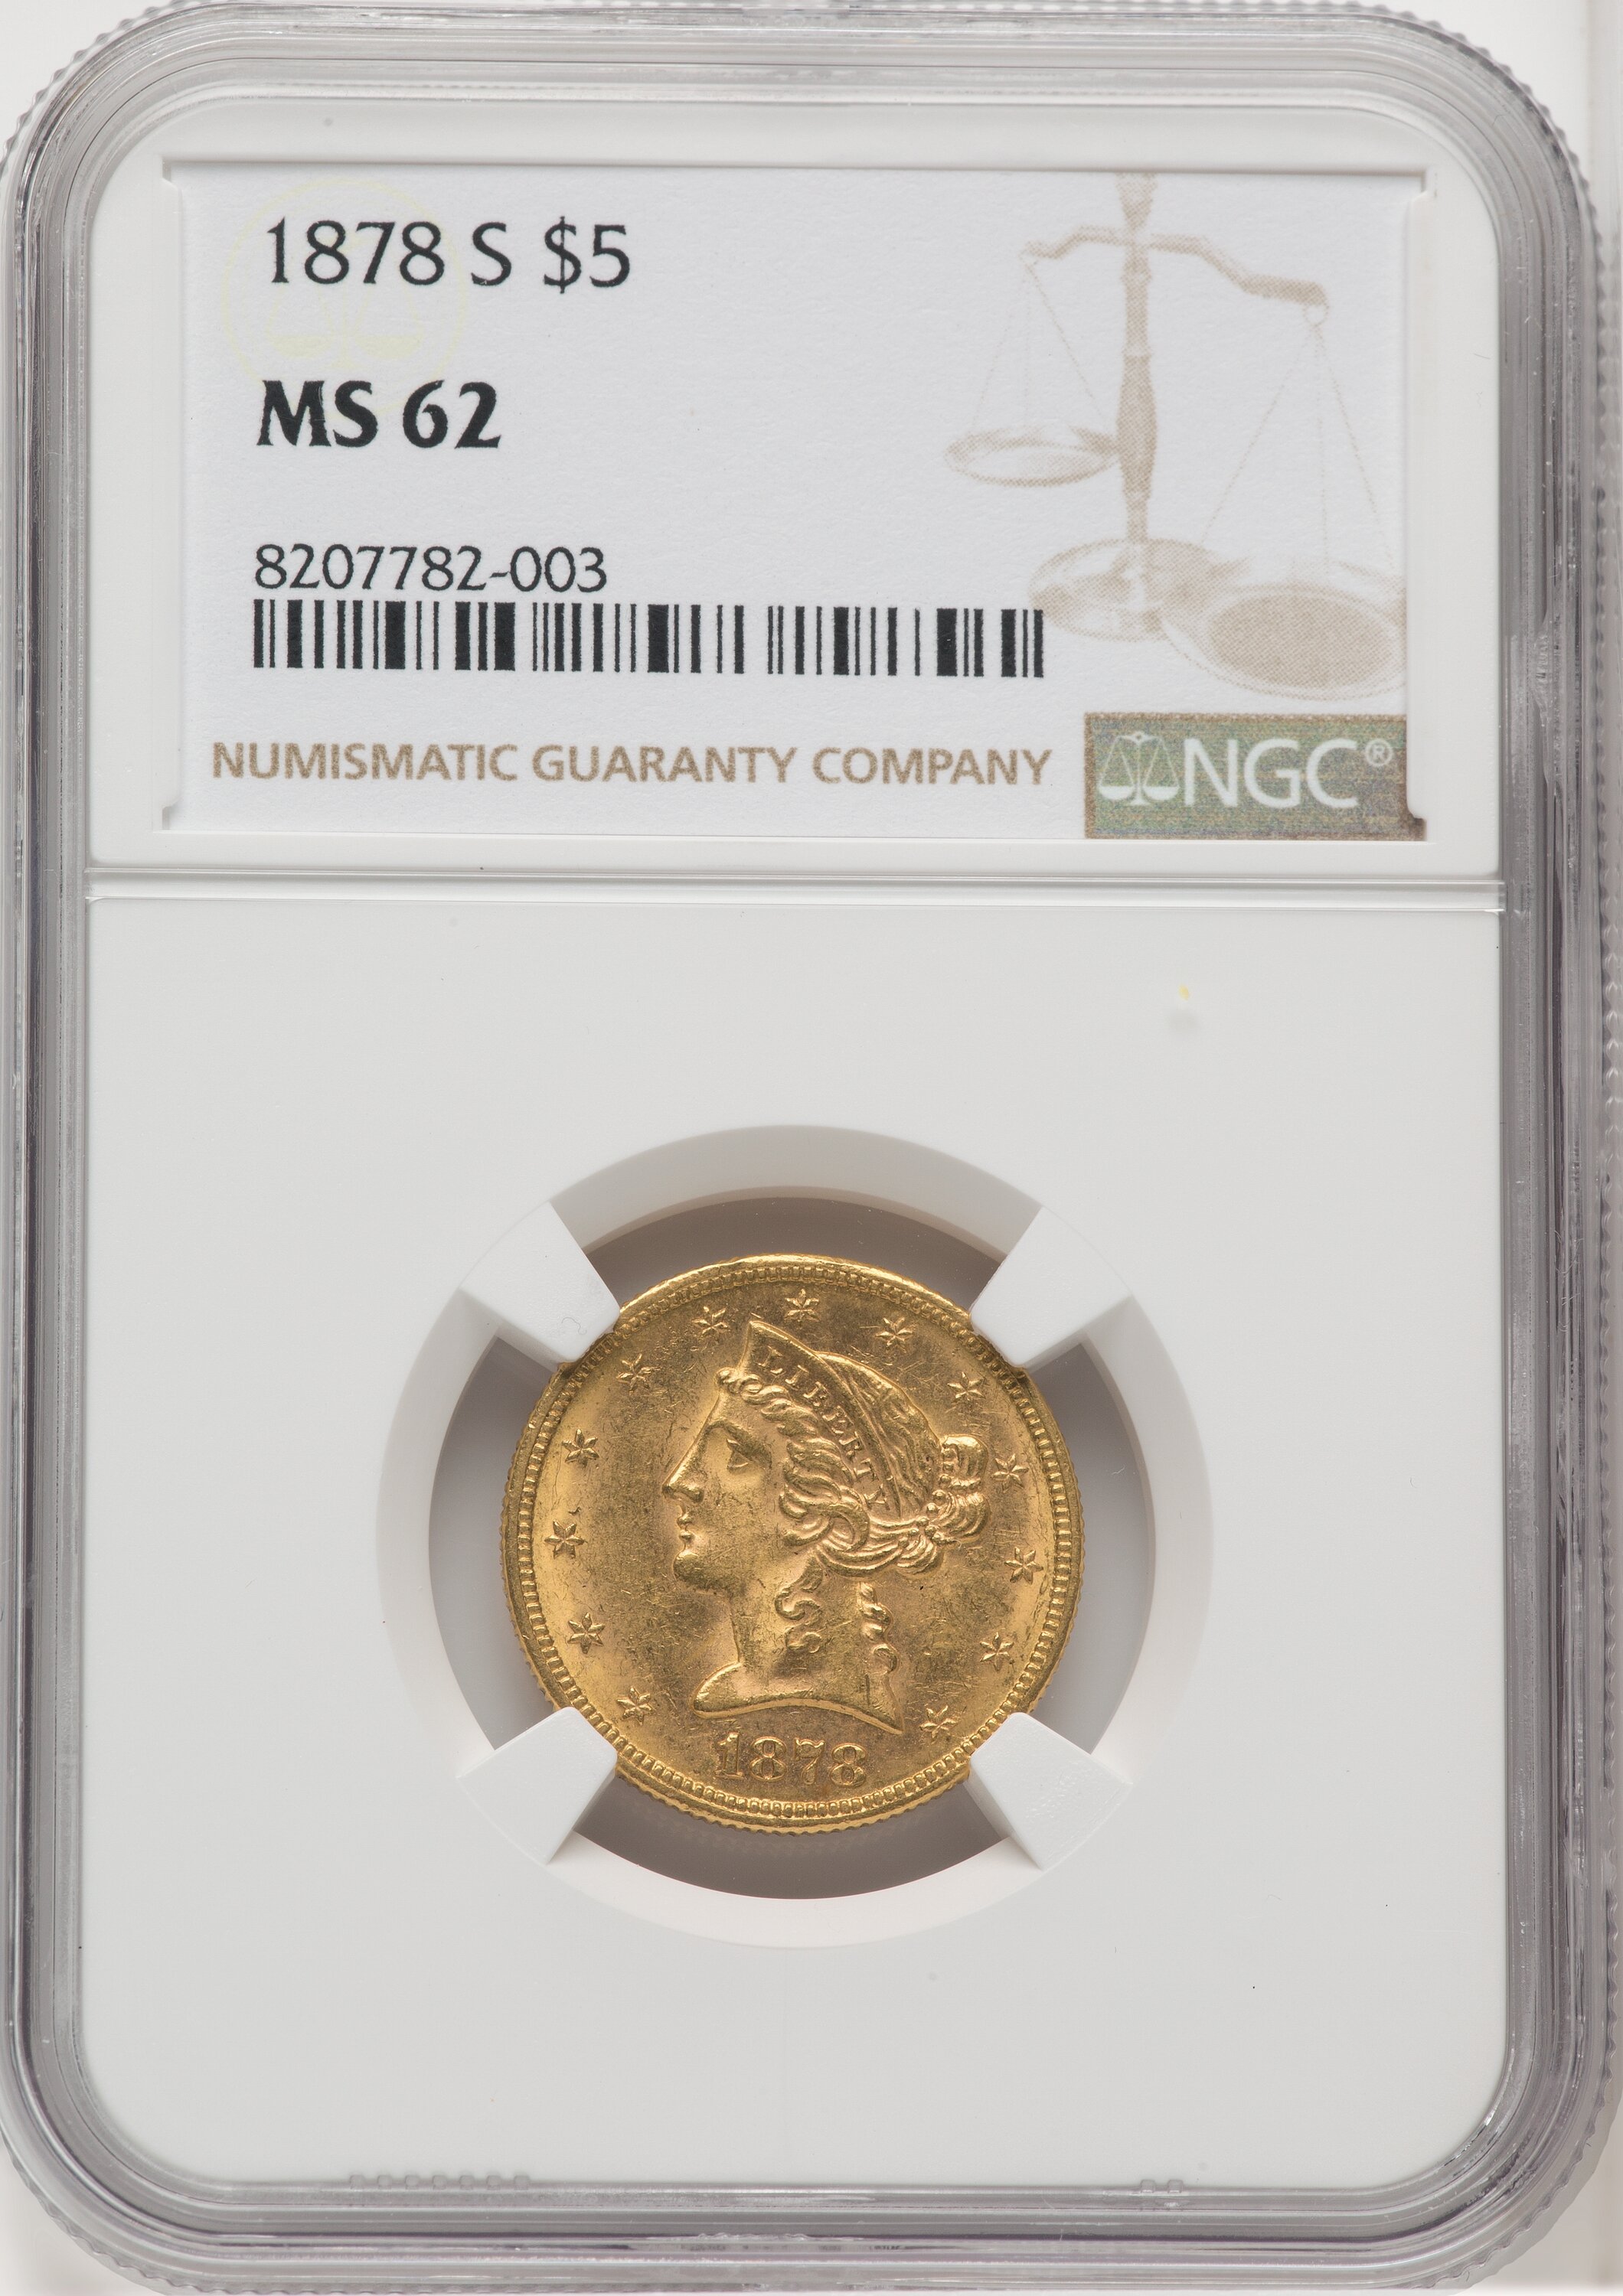 1878-S $5 62 NGC